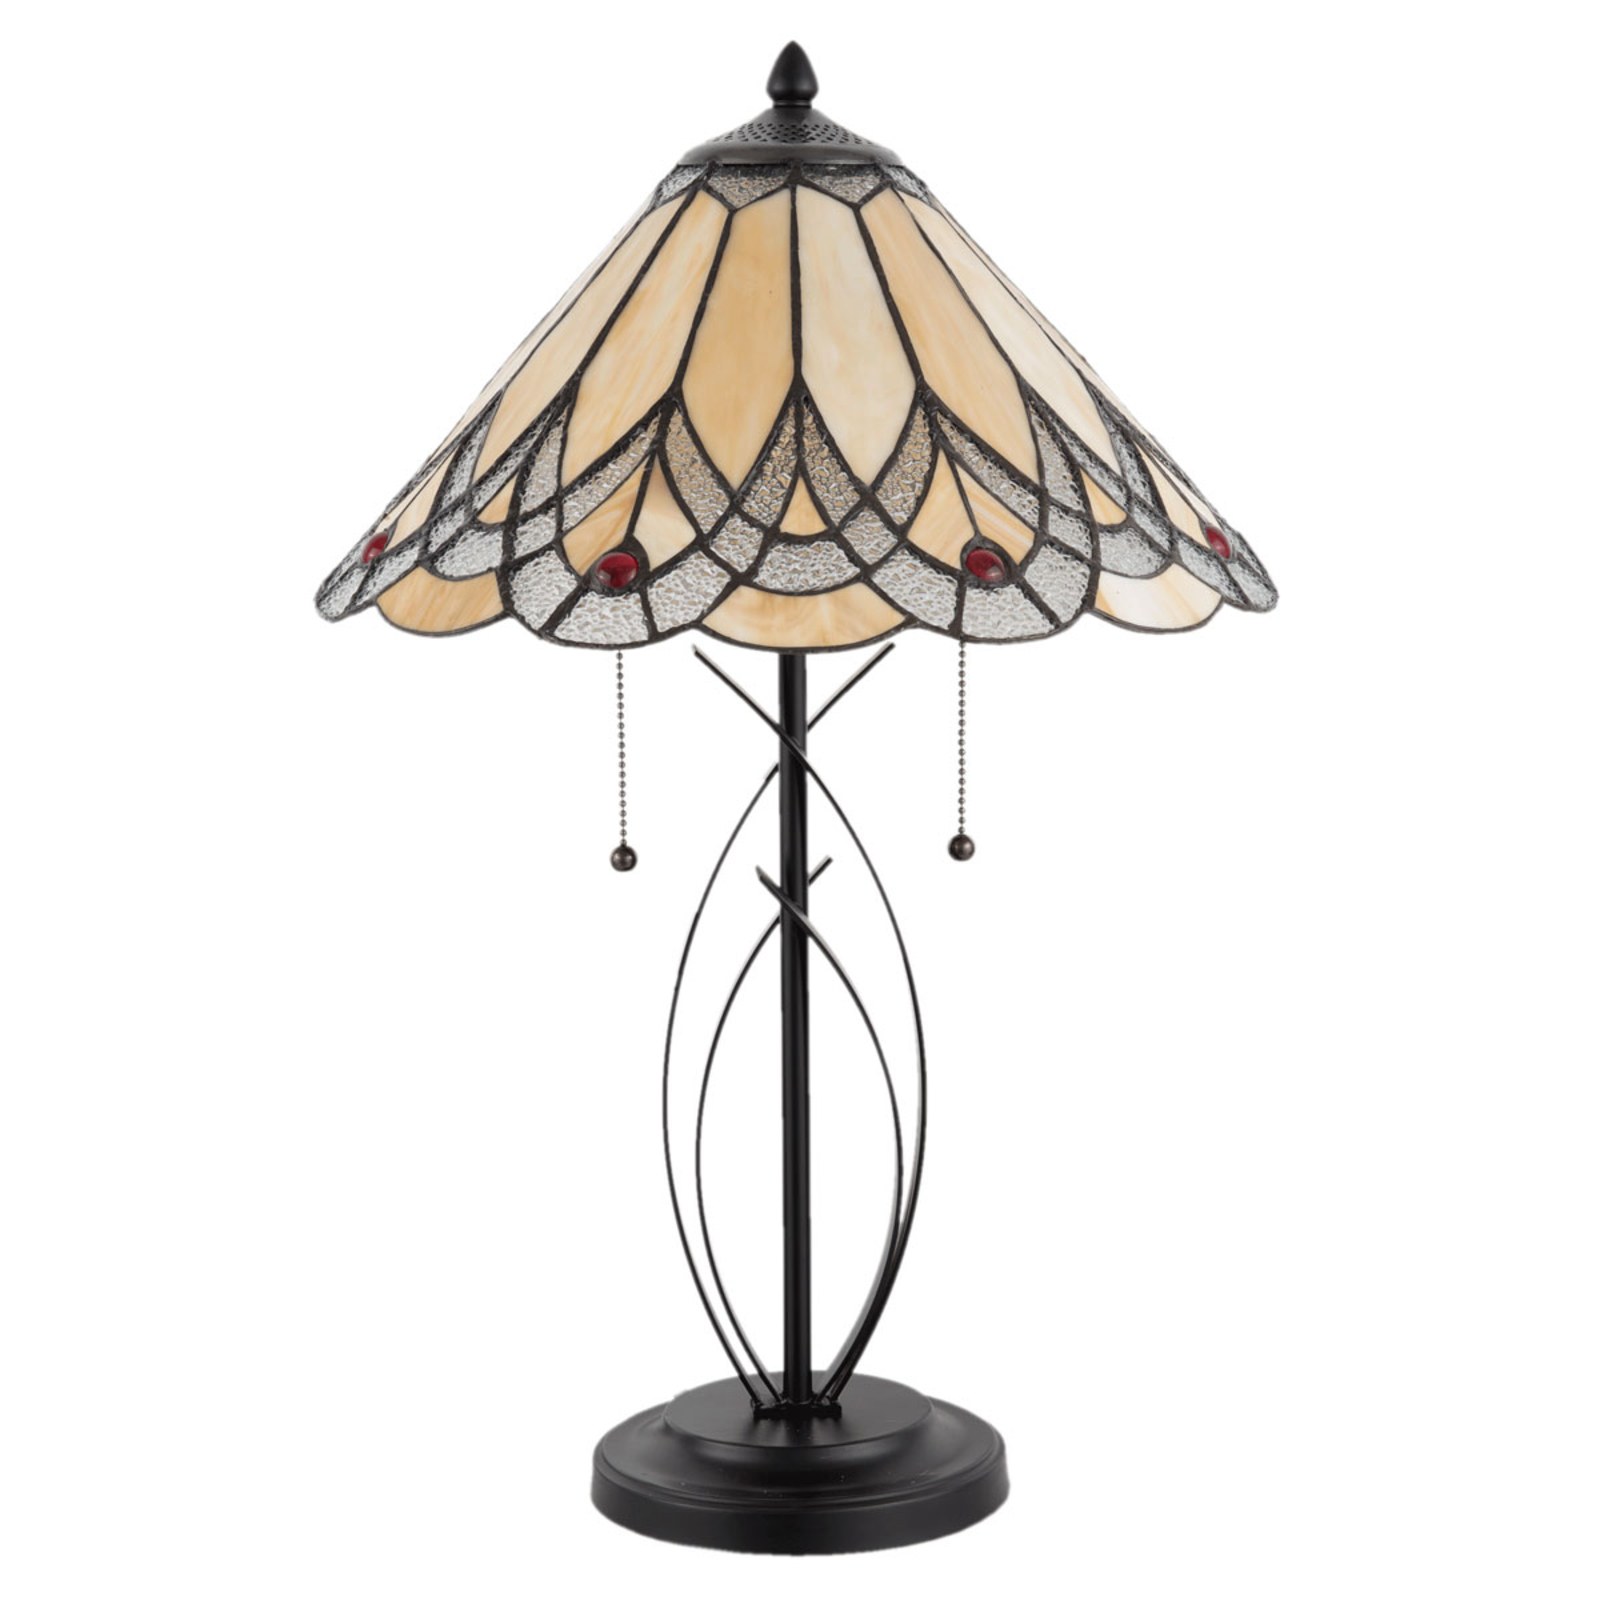 Stolna lampa 5186 sa staklenim sjenilom boje jantara